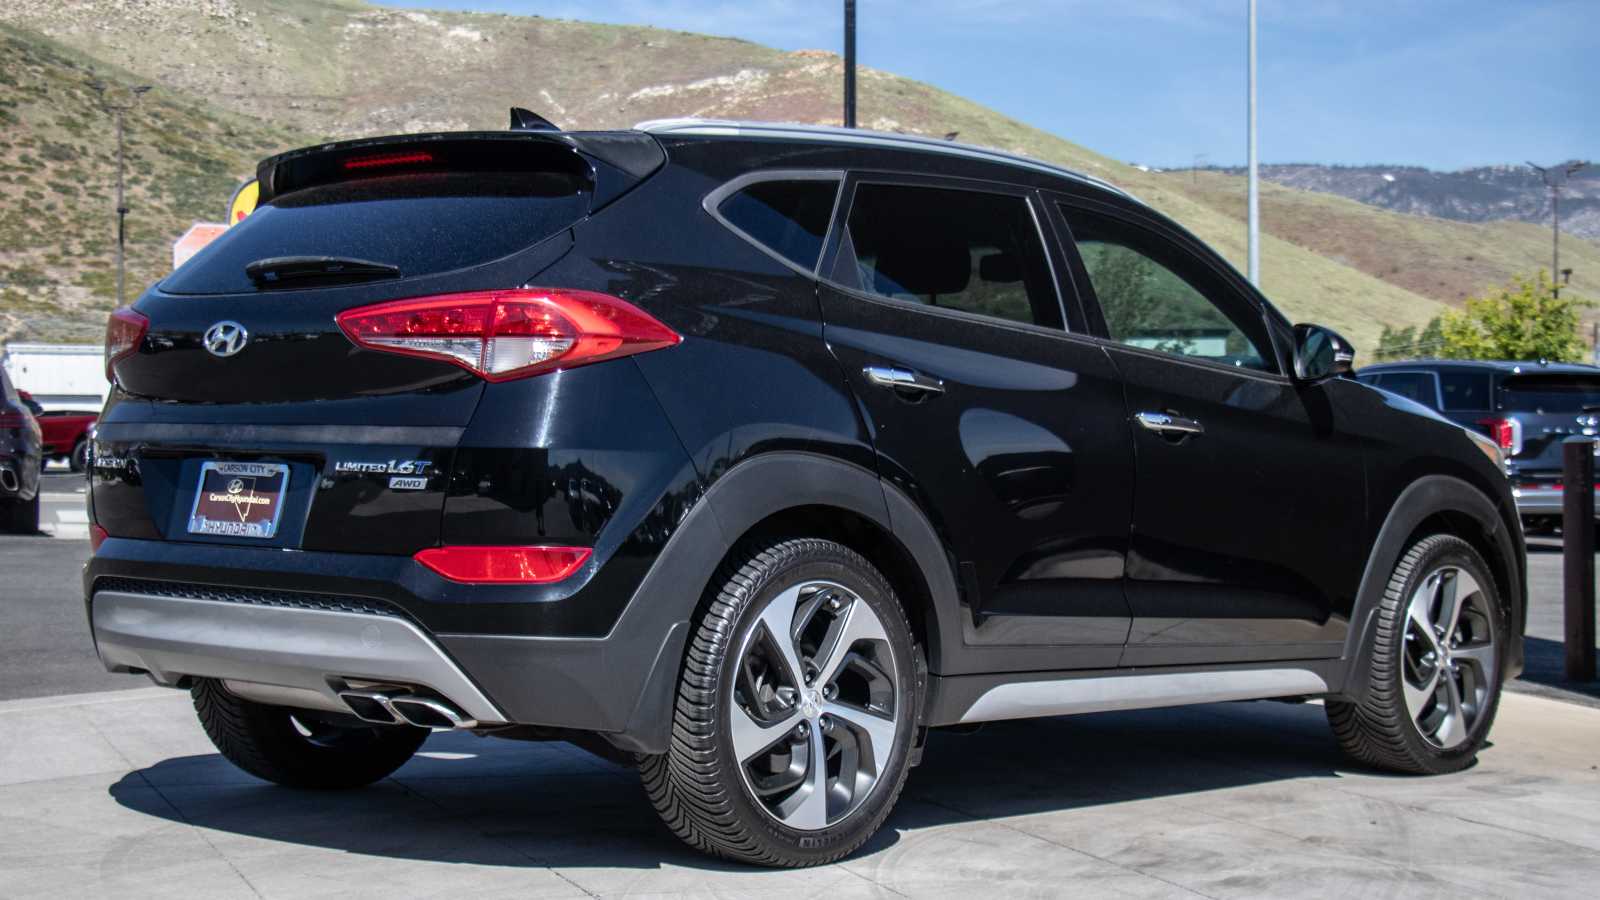 2018 Hyundai Tucson Limited 7